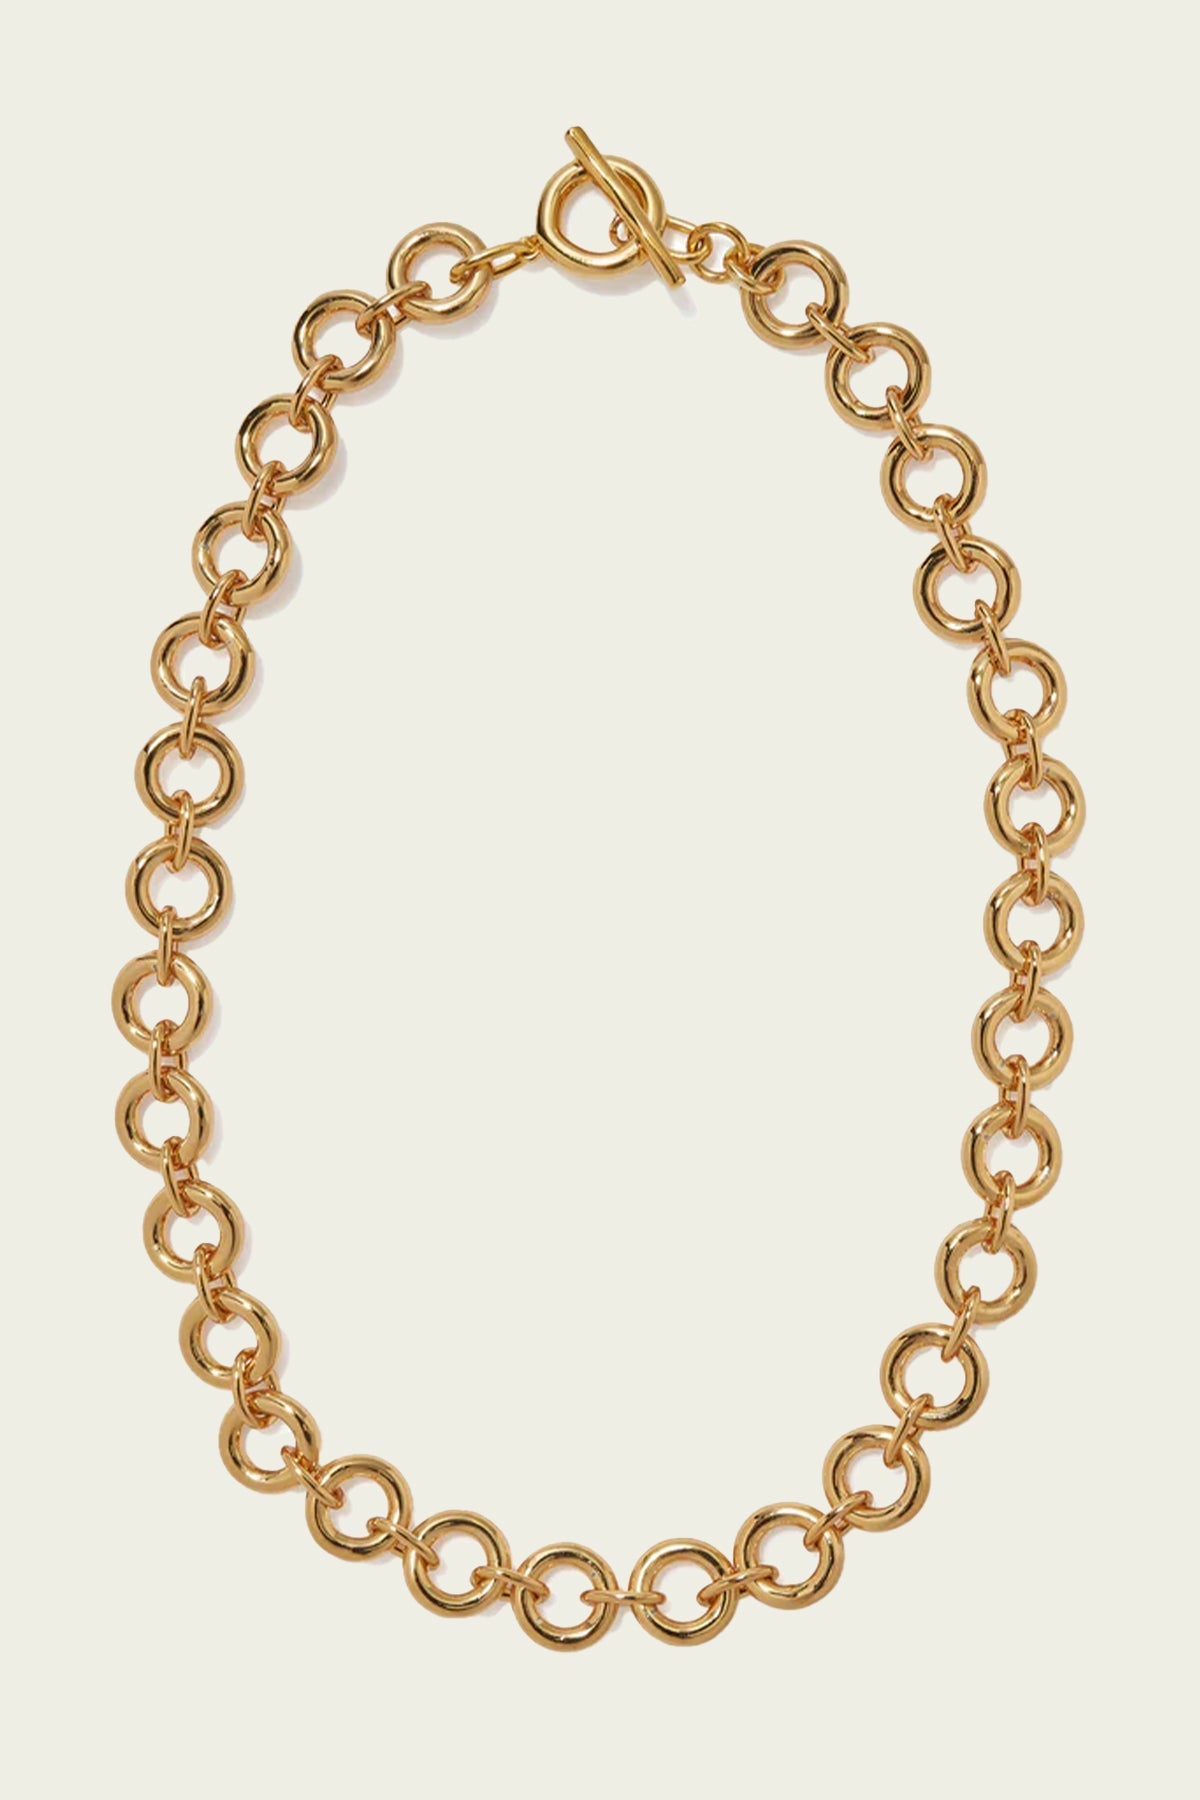 Mood Necklace in Gold - shop-olivia.com